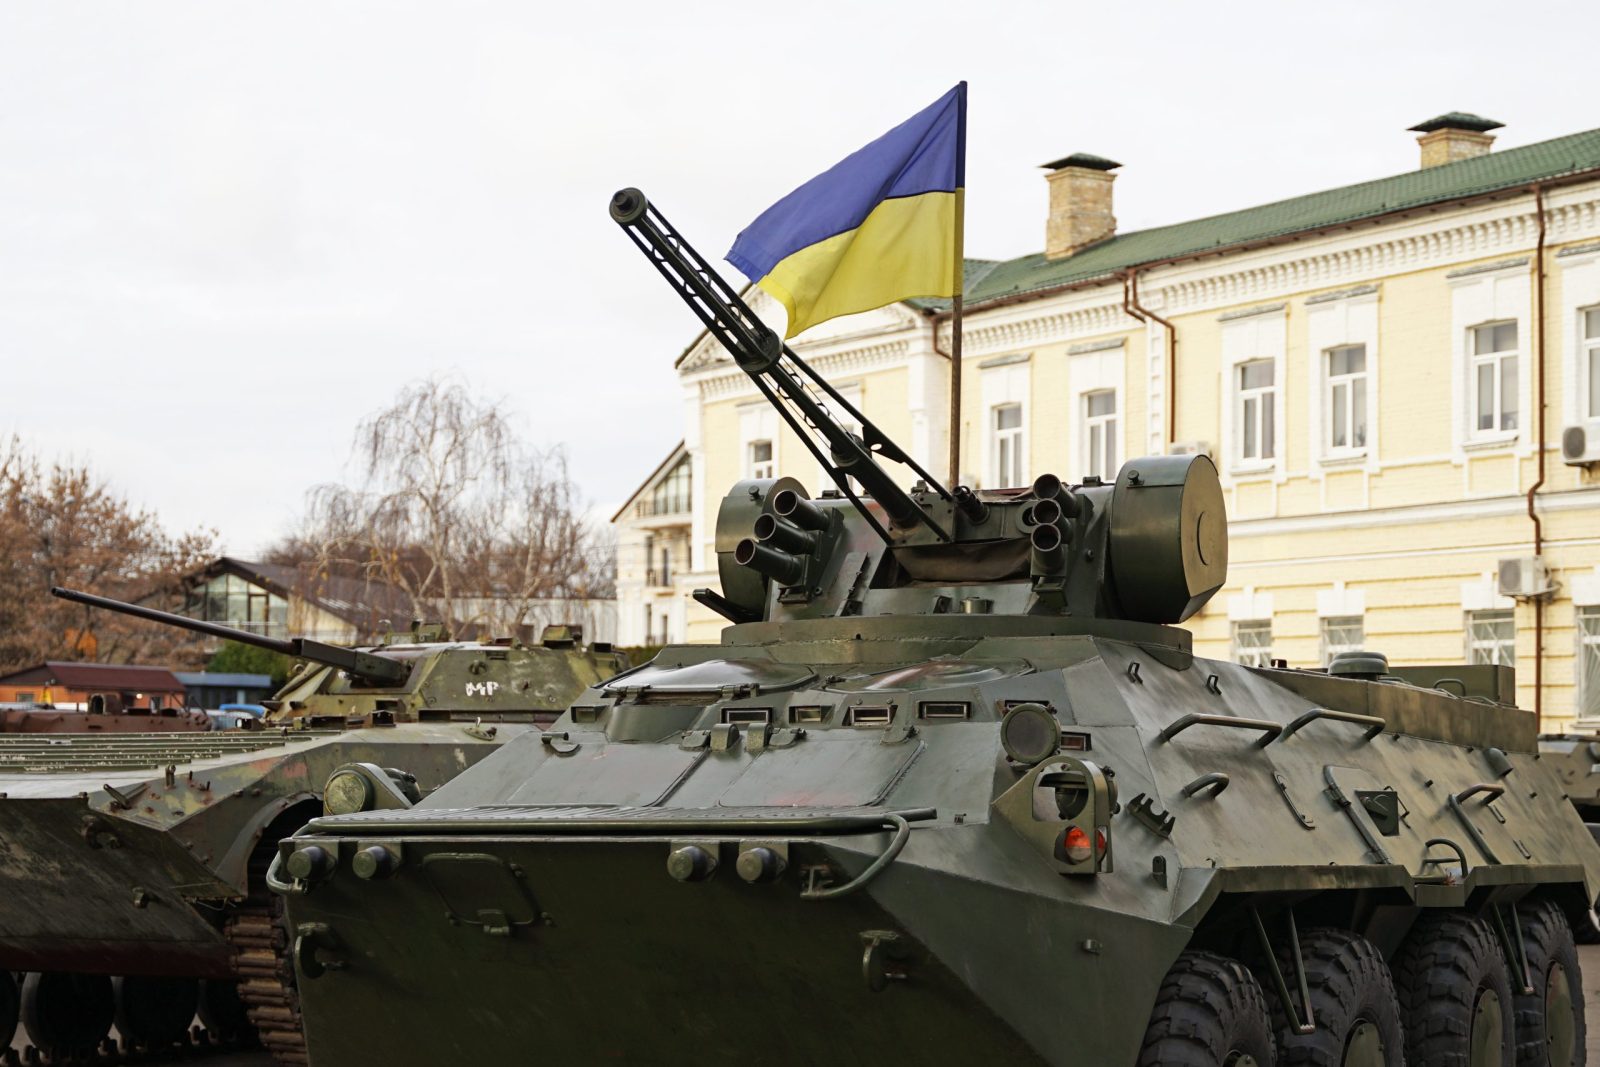 Russian tanks in Ukraine with Ukrainian flag